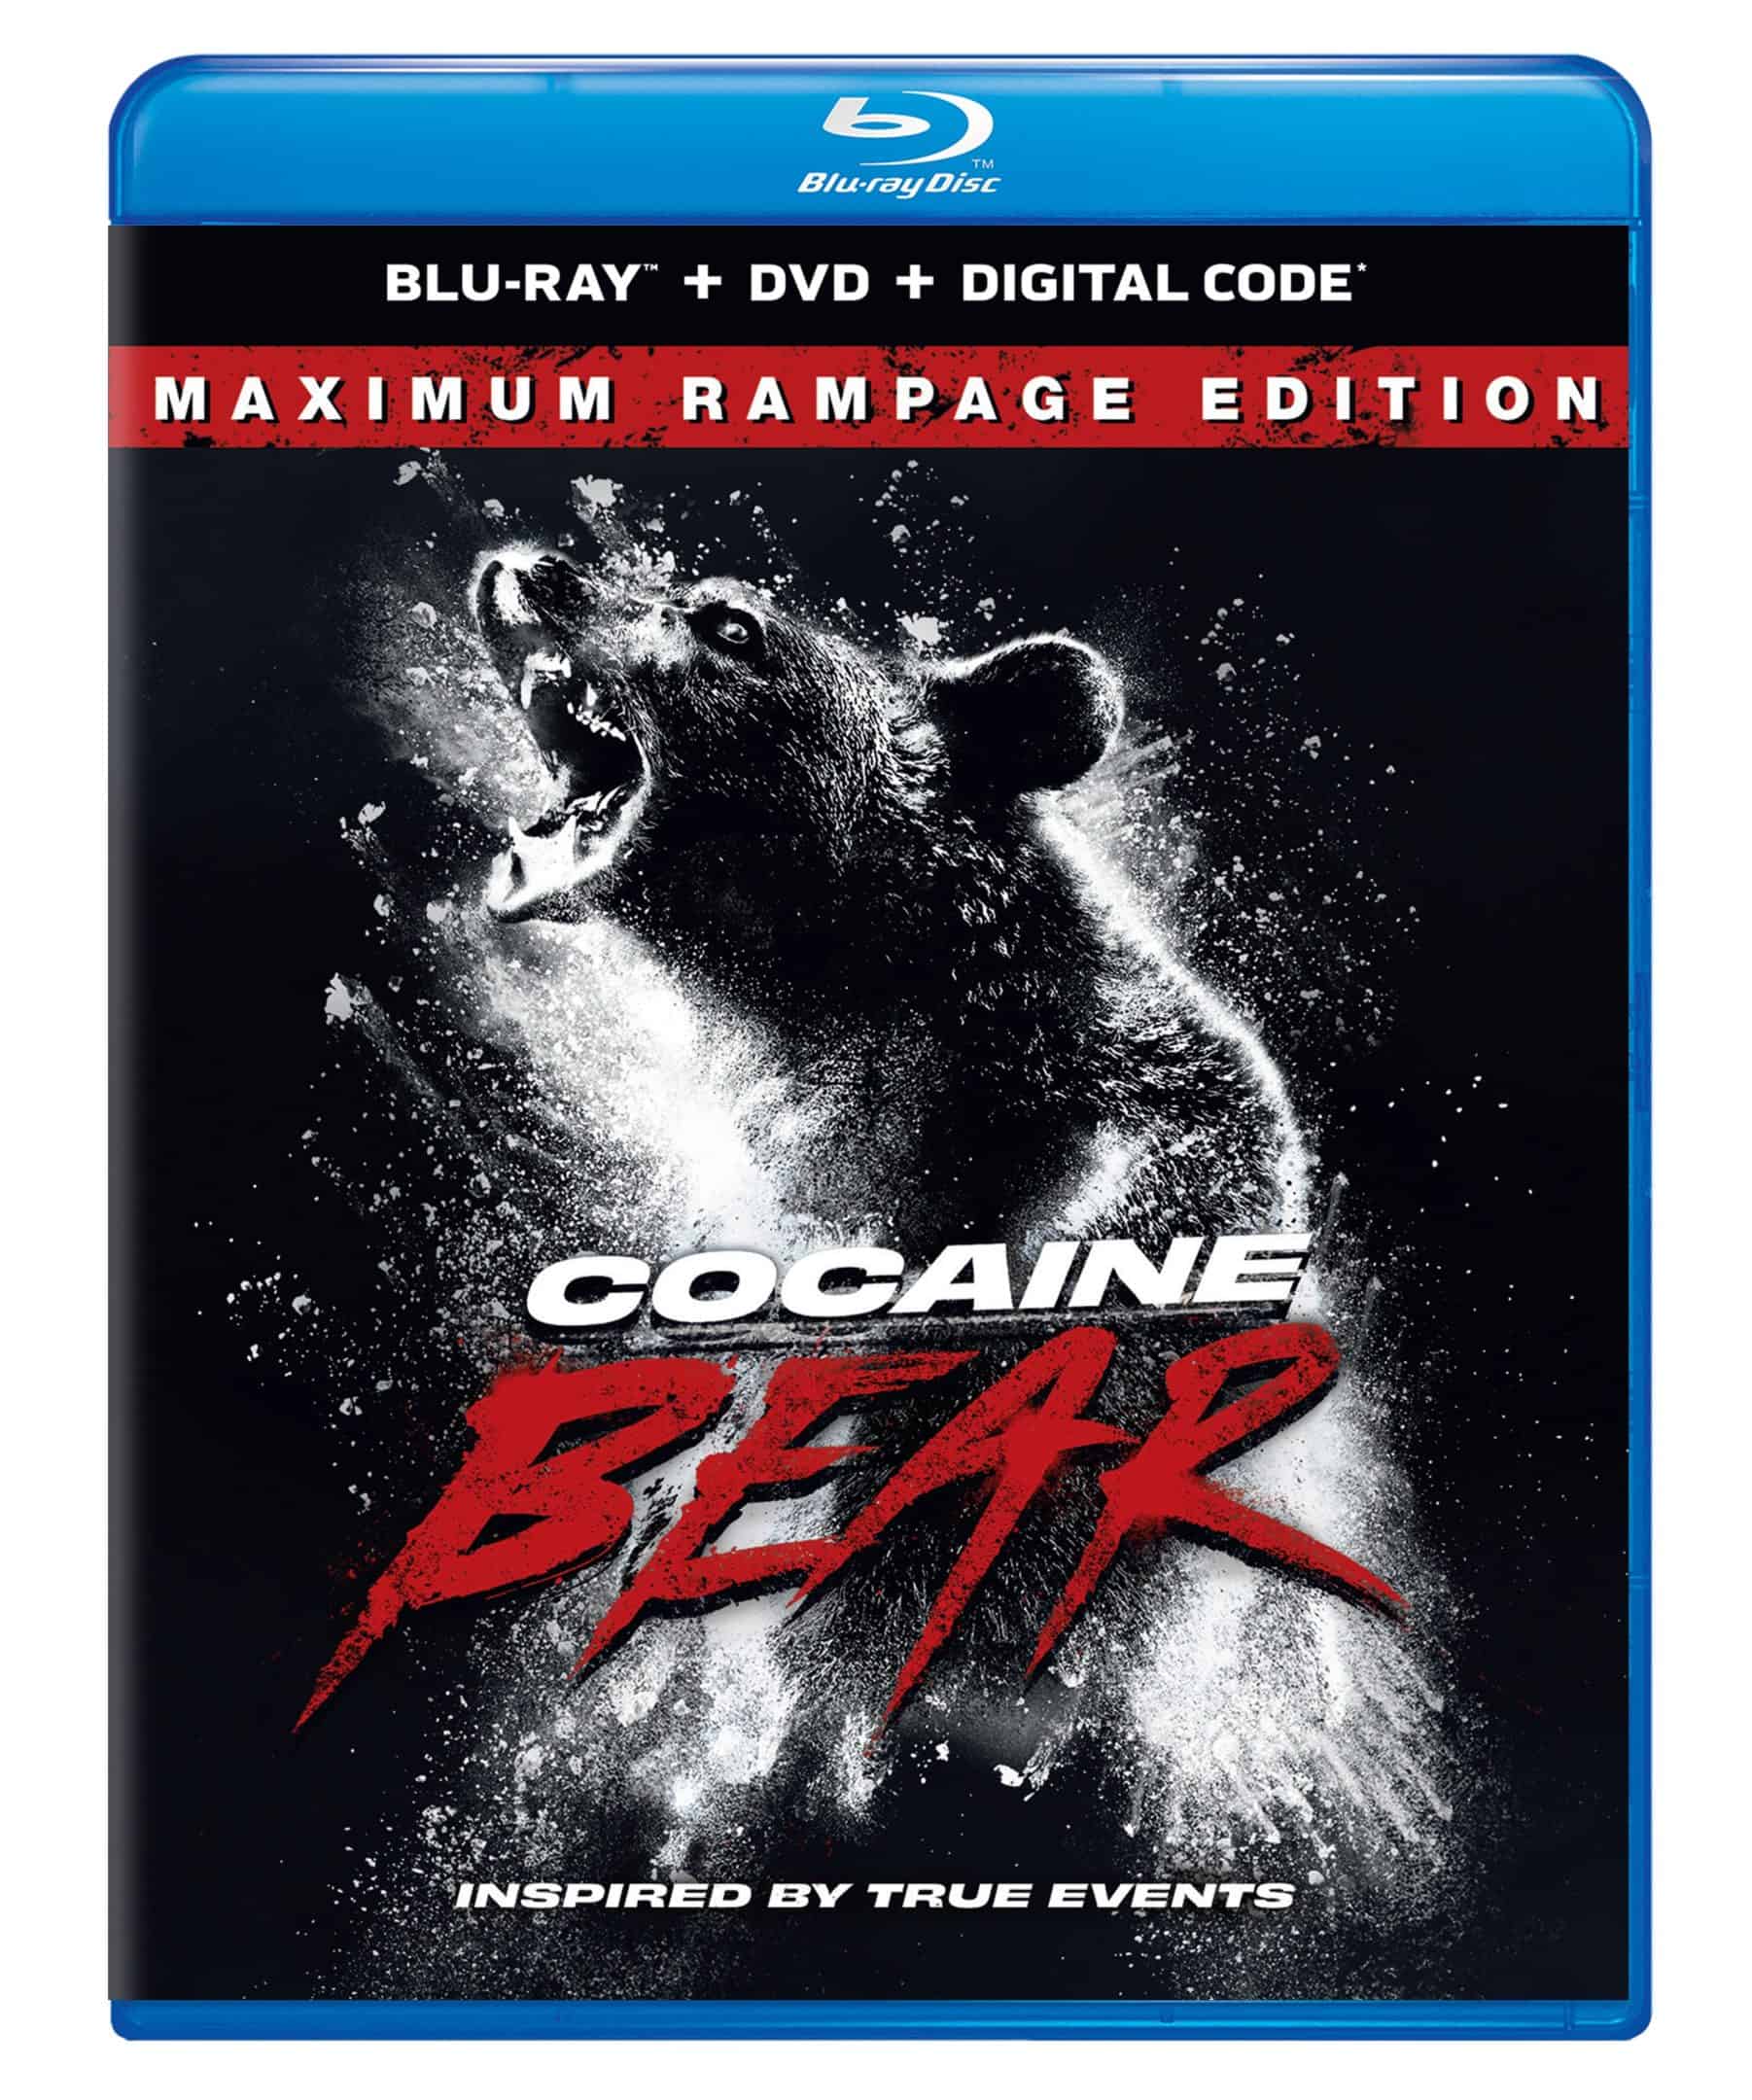 Cocaine Bear Blu-ray box